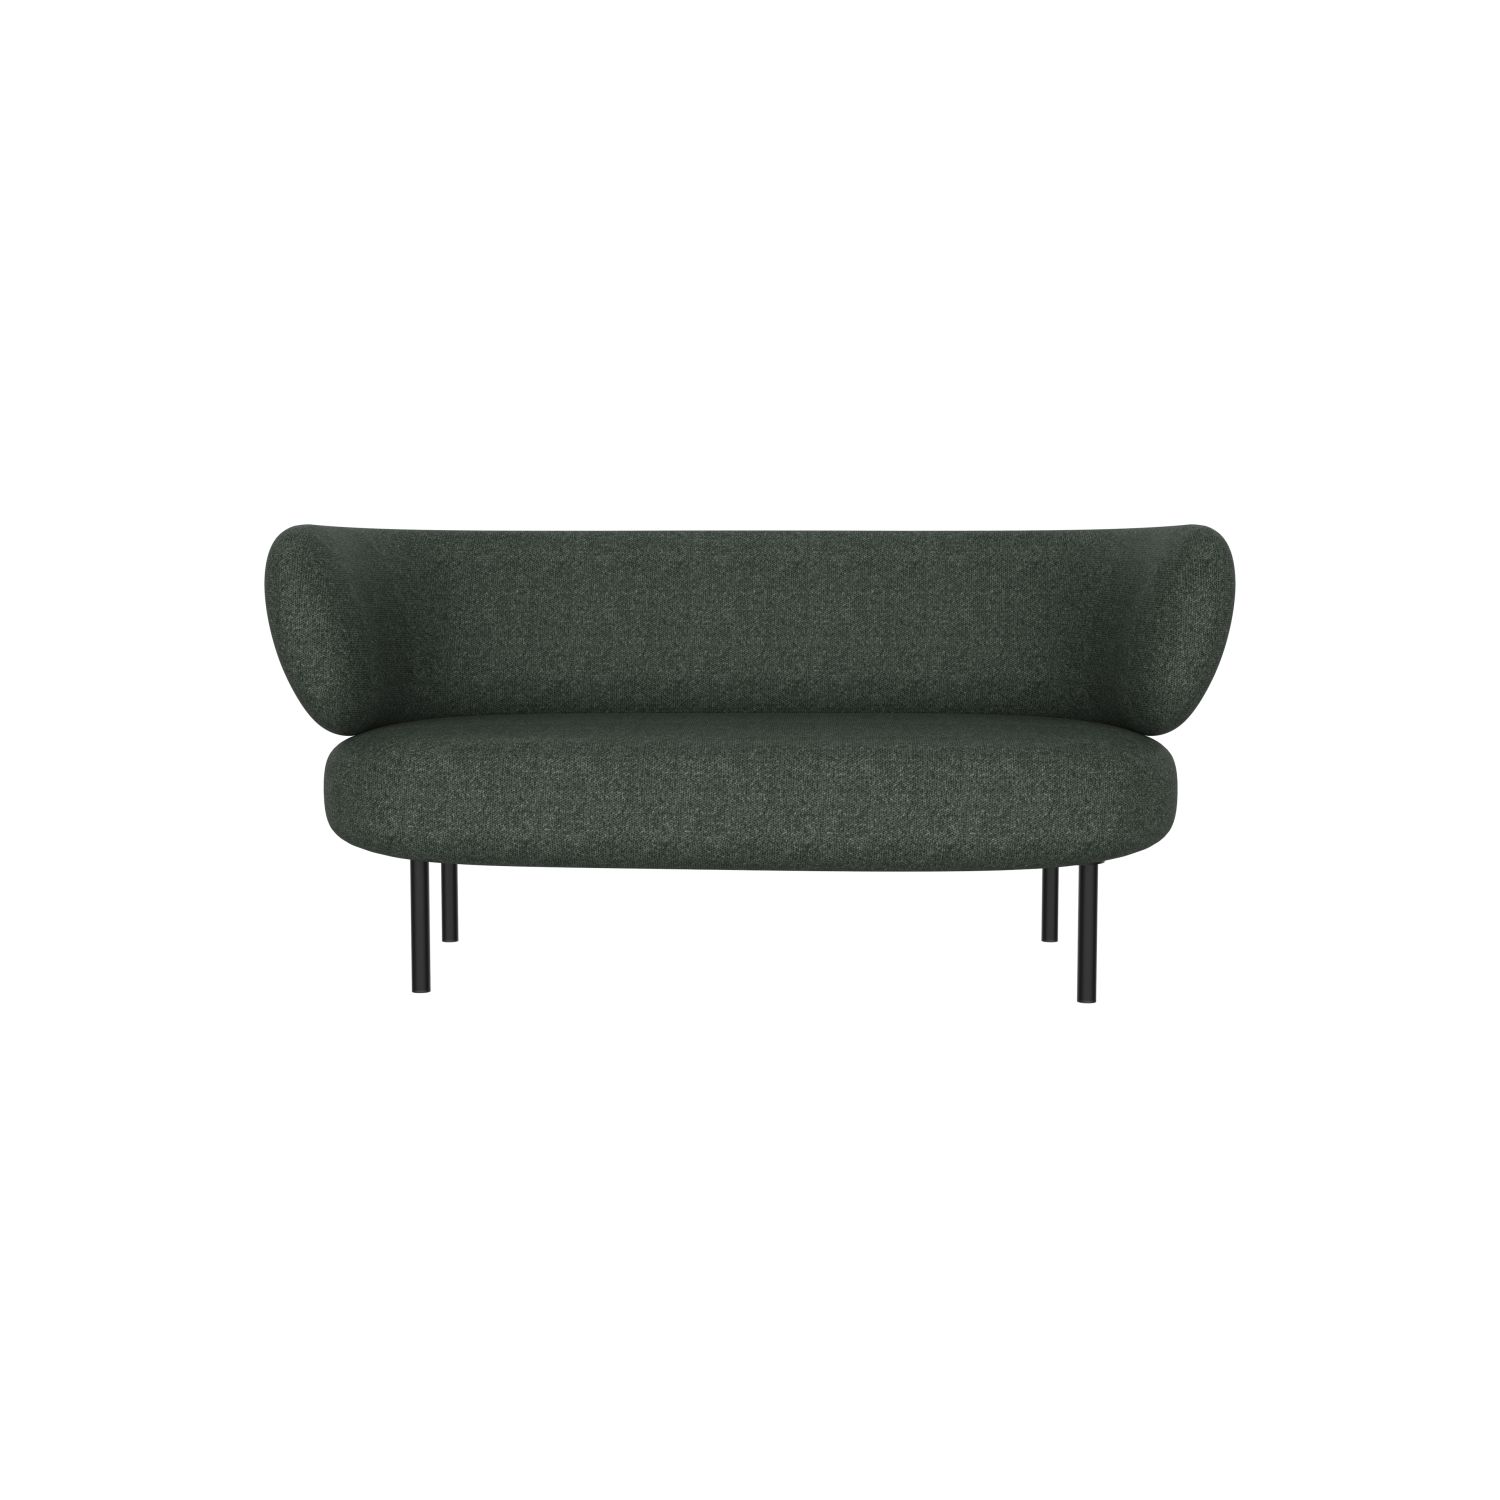 lensvelt studio stefan scholten sofa 2seater 160x84cm middle lounge part moss summer green 38 frame black ral9005